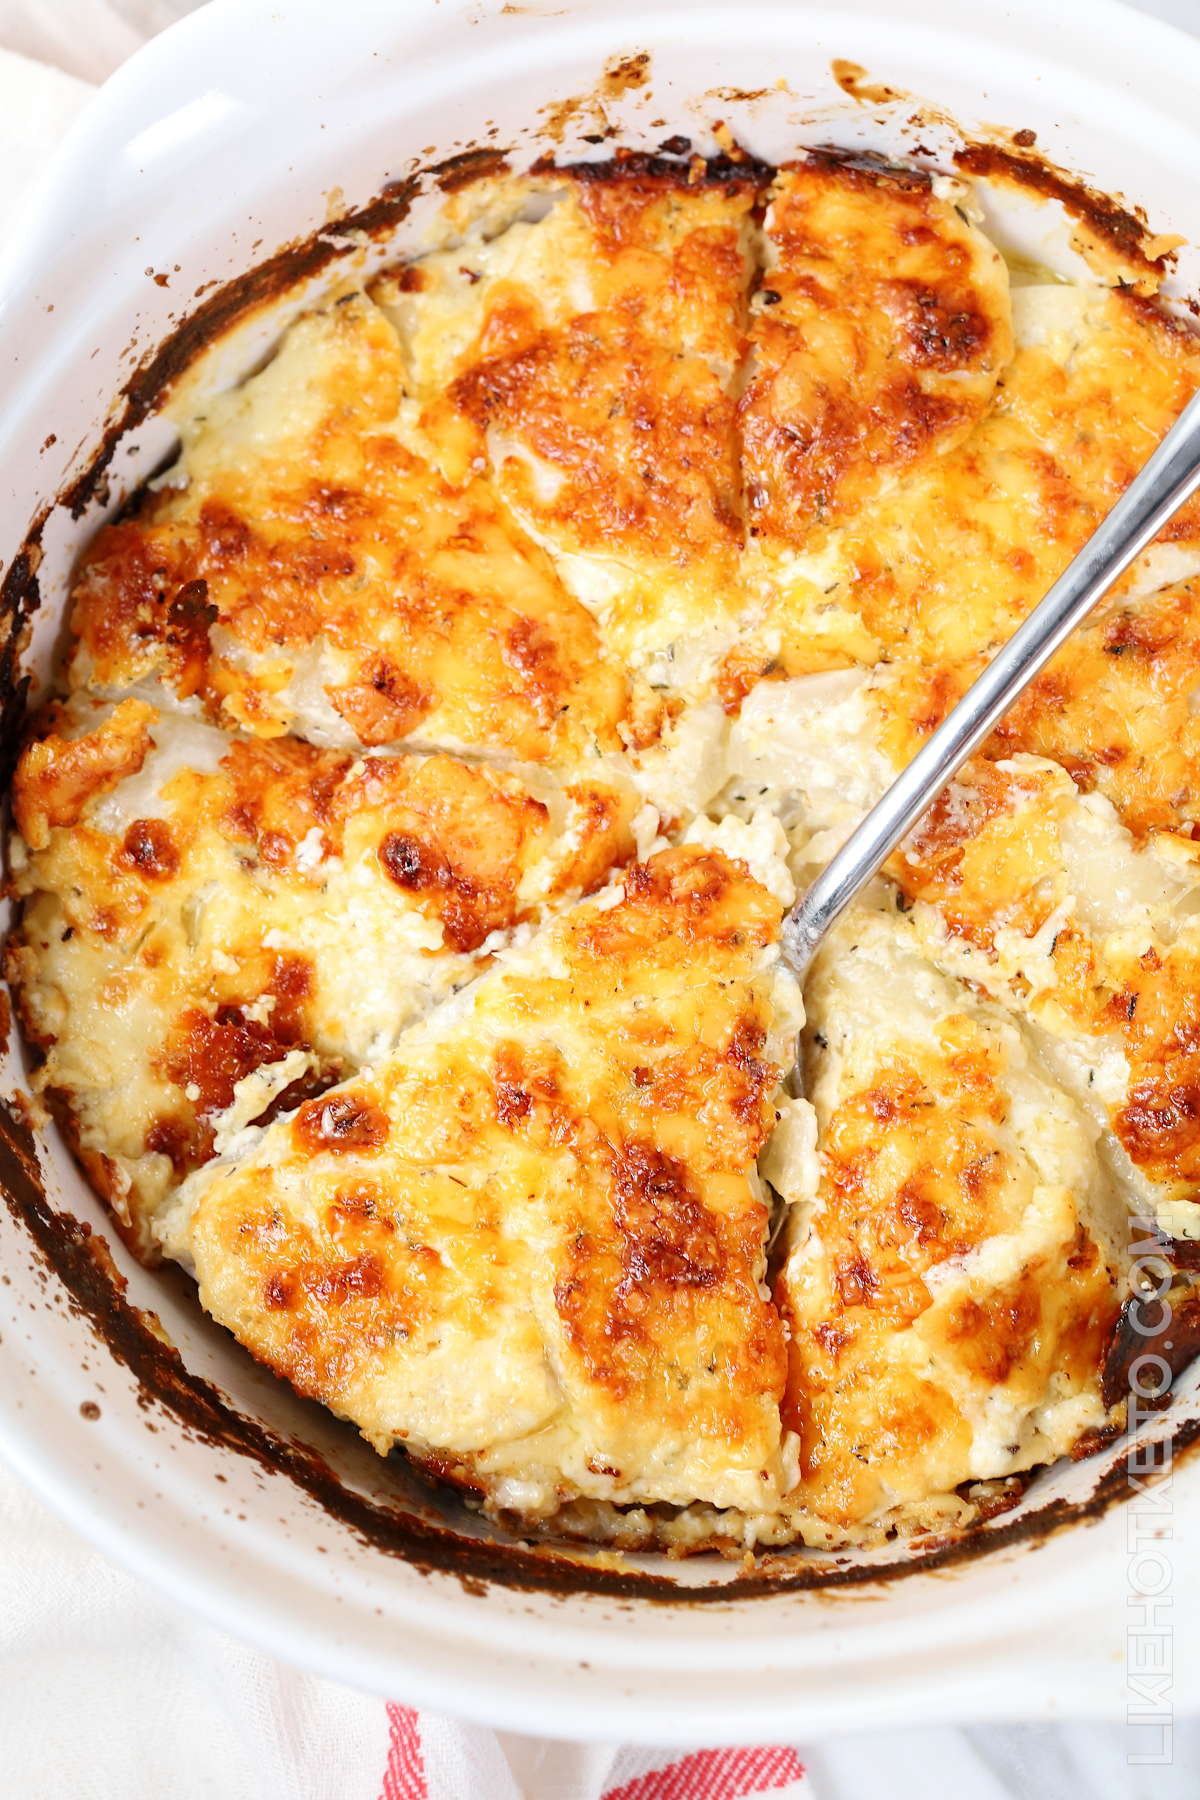 Scalloped turnips keto casserole with crusty cheese.